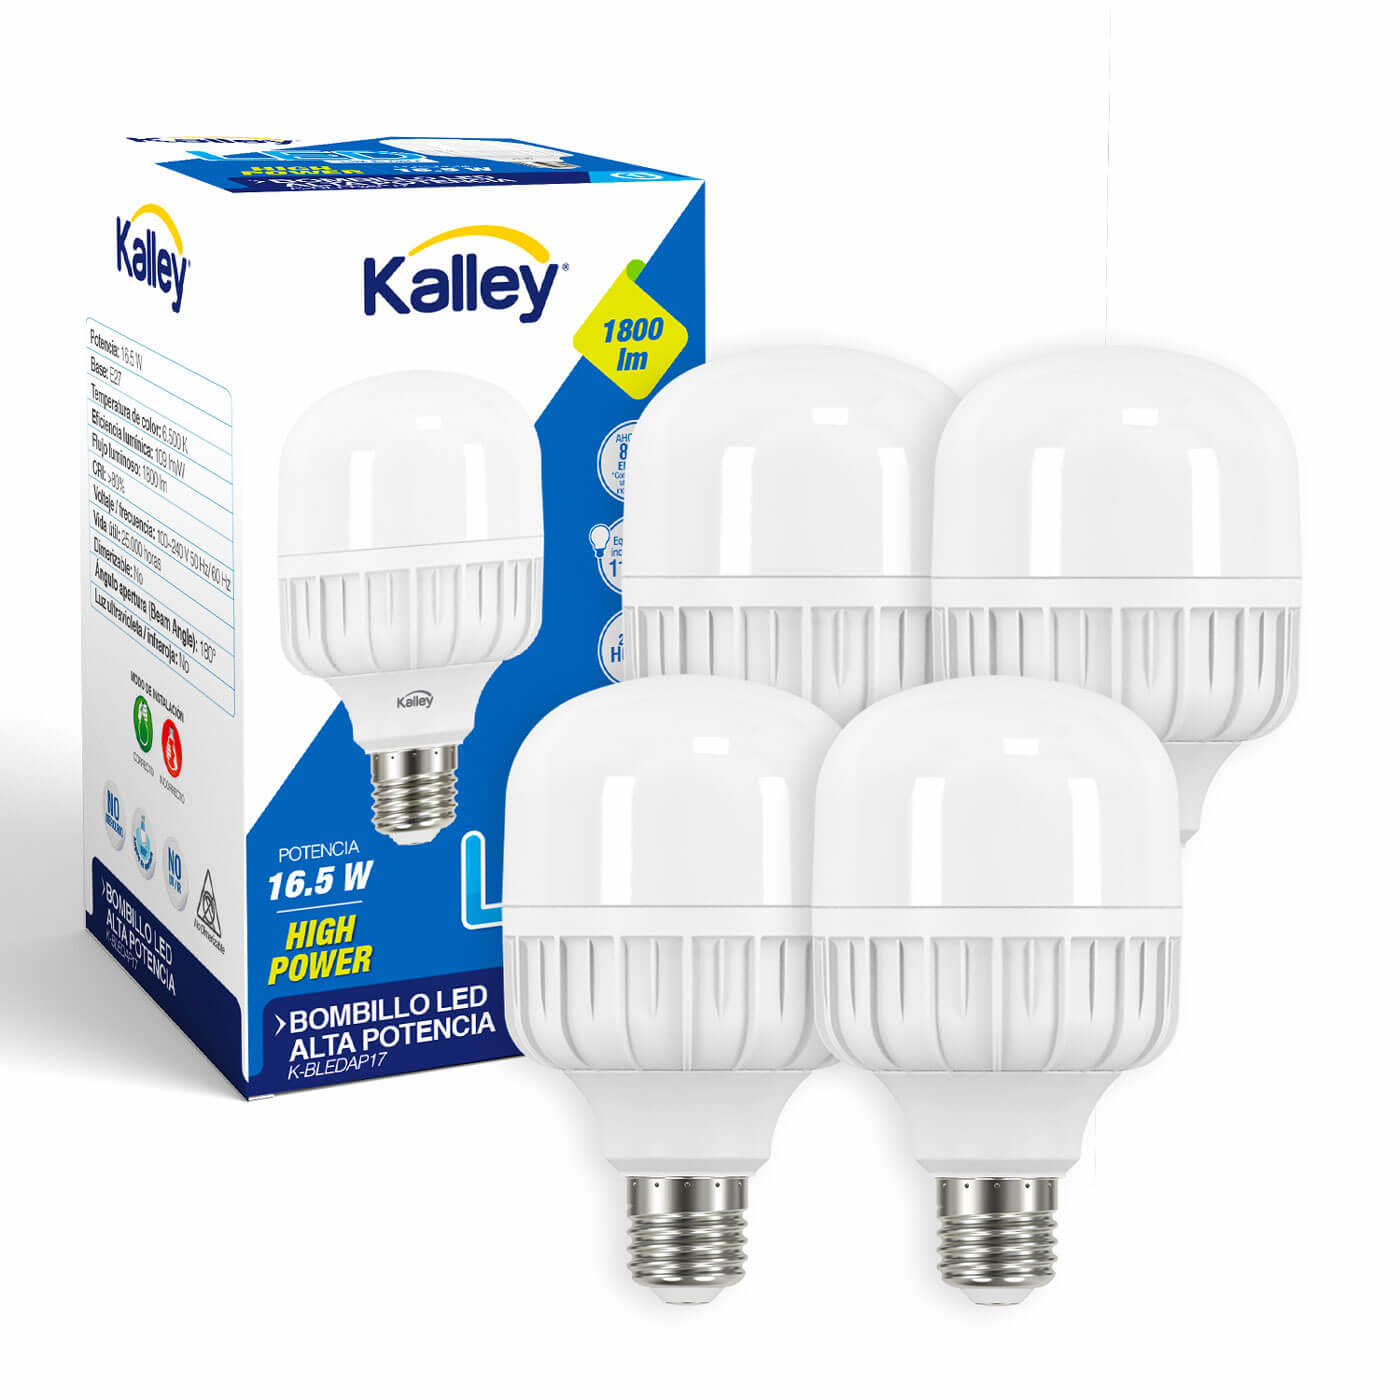 Pack x 4 bombillo alta potencia LED KALLEY K-BLEDAP17 16,5W.